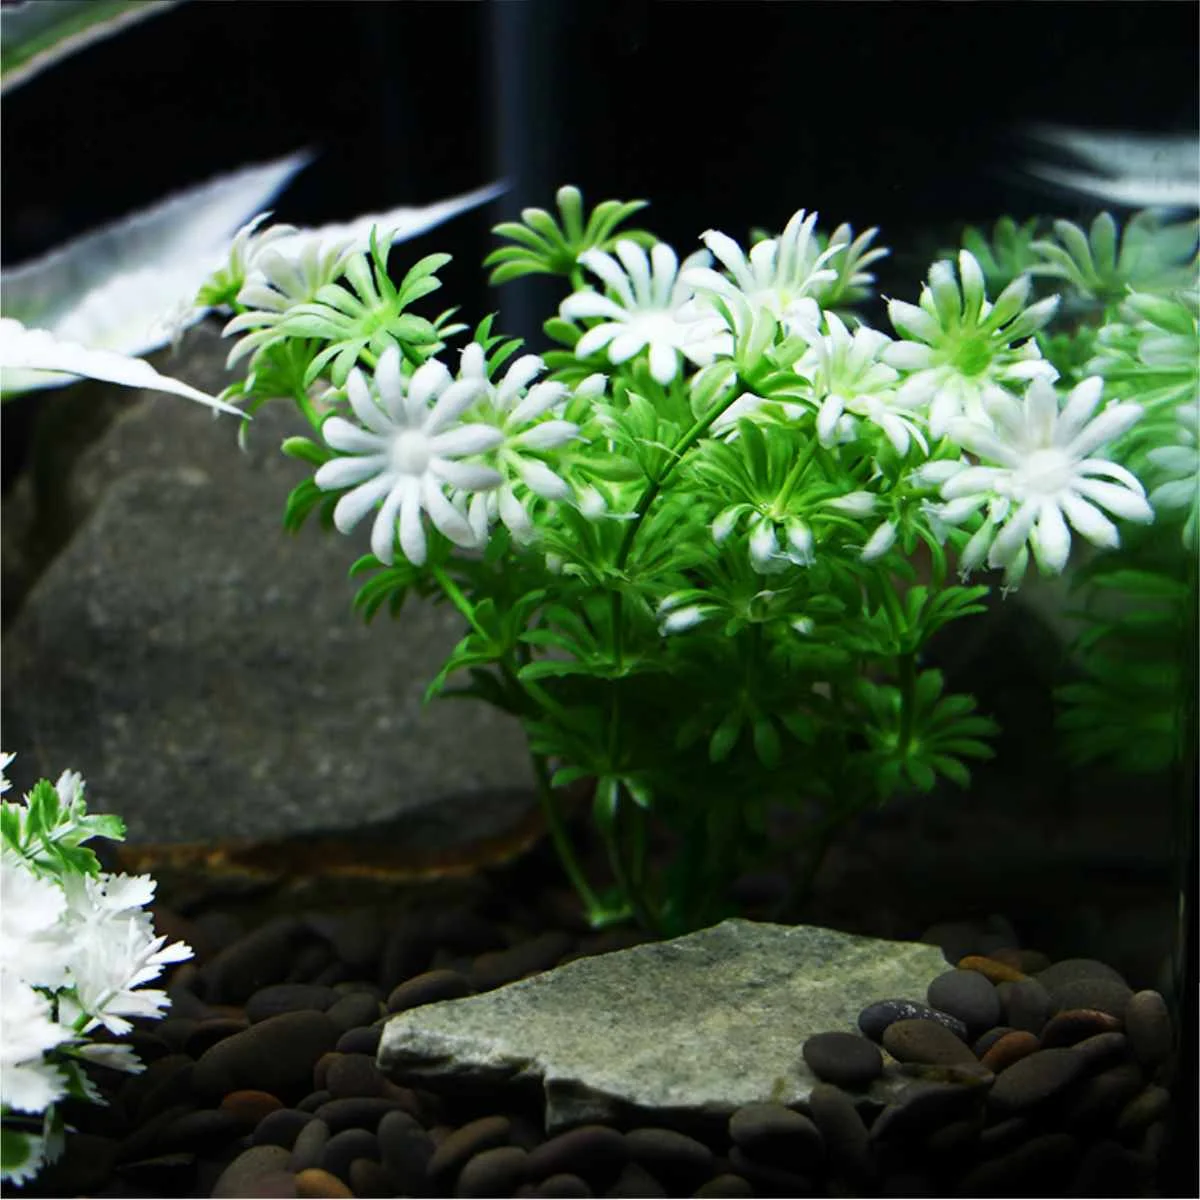 

Plastic Artificial Underwater Plants Aquarium Fish Tank Decoration Green Water Grass White Leaf Crown Grass Viewing Decorations